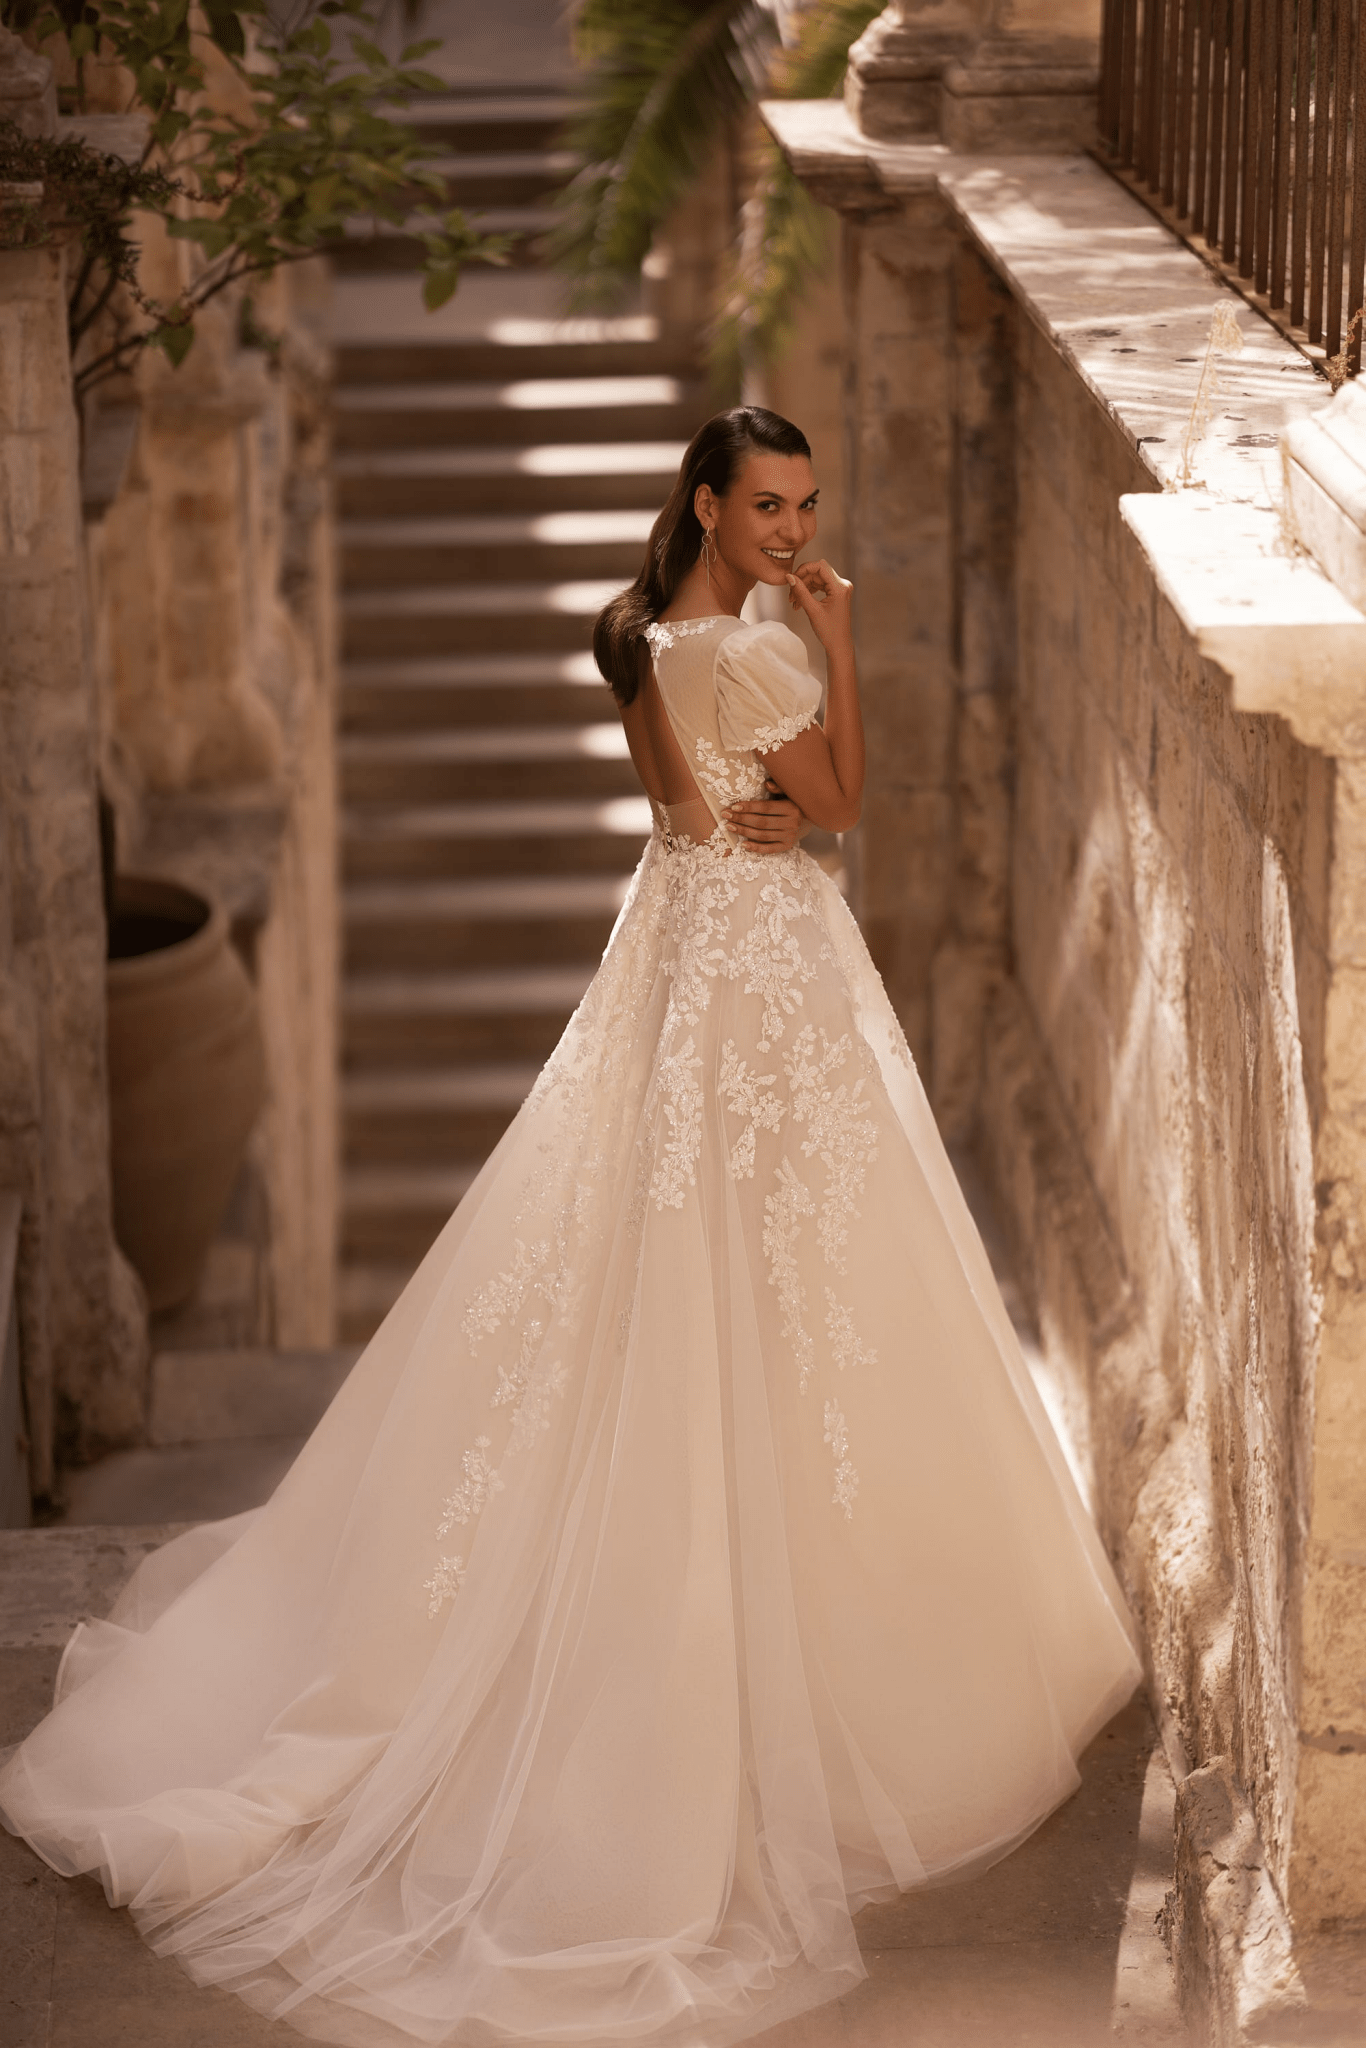 Elegant V-Neck Wedding Dress with Floral Lace - Short Sleeve Dress - A-Line Wedding Dress Plus Size - WonderlandByLilian